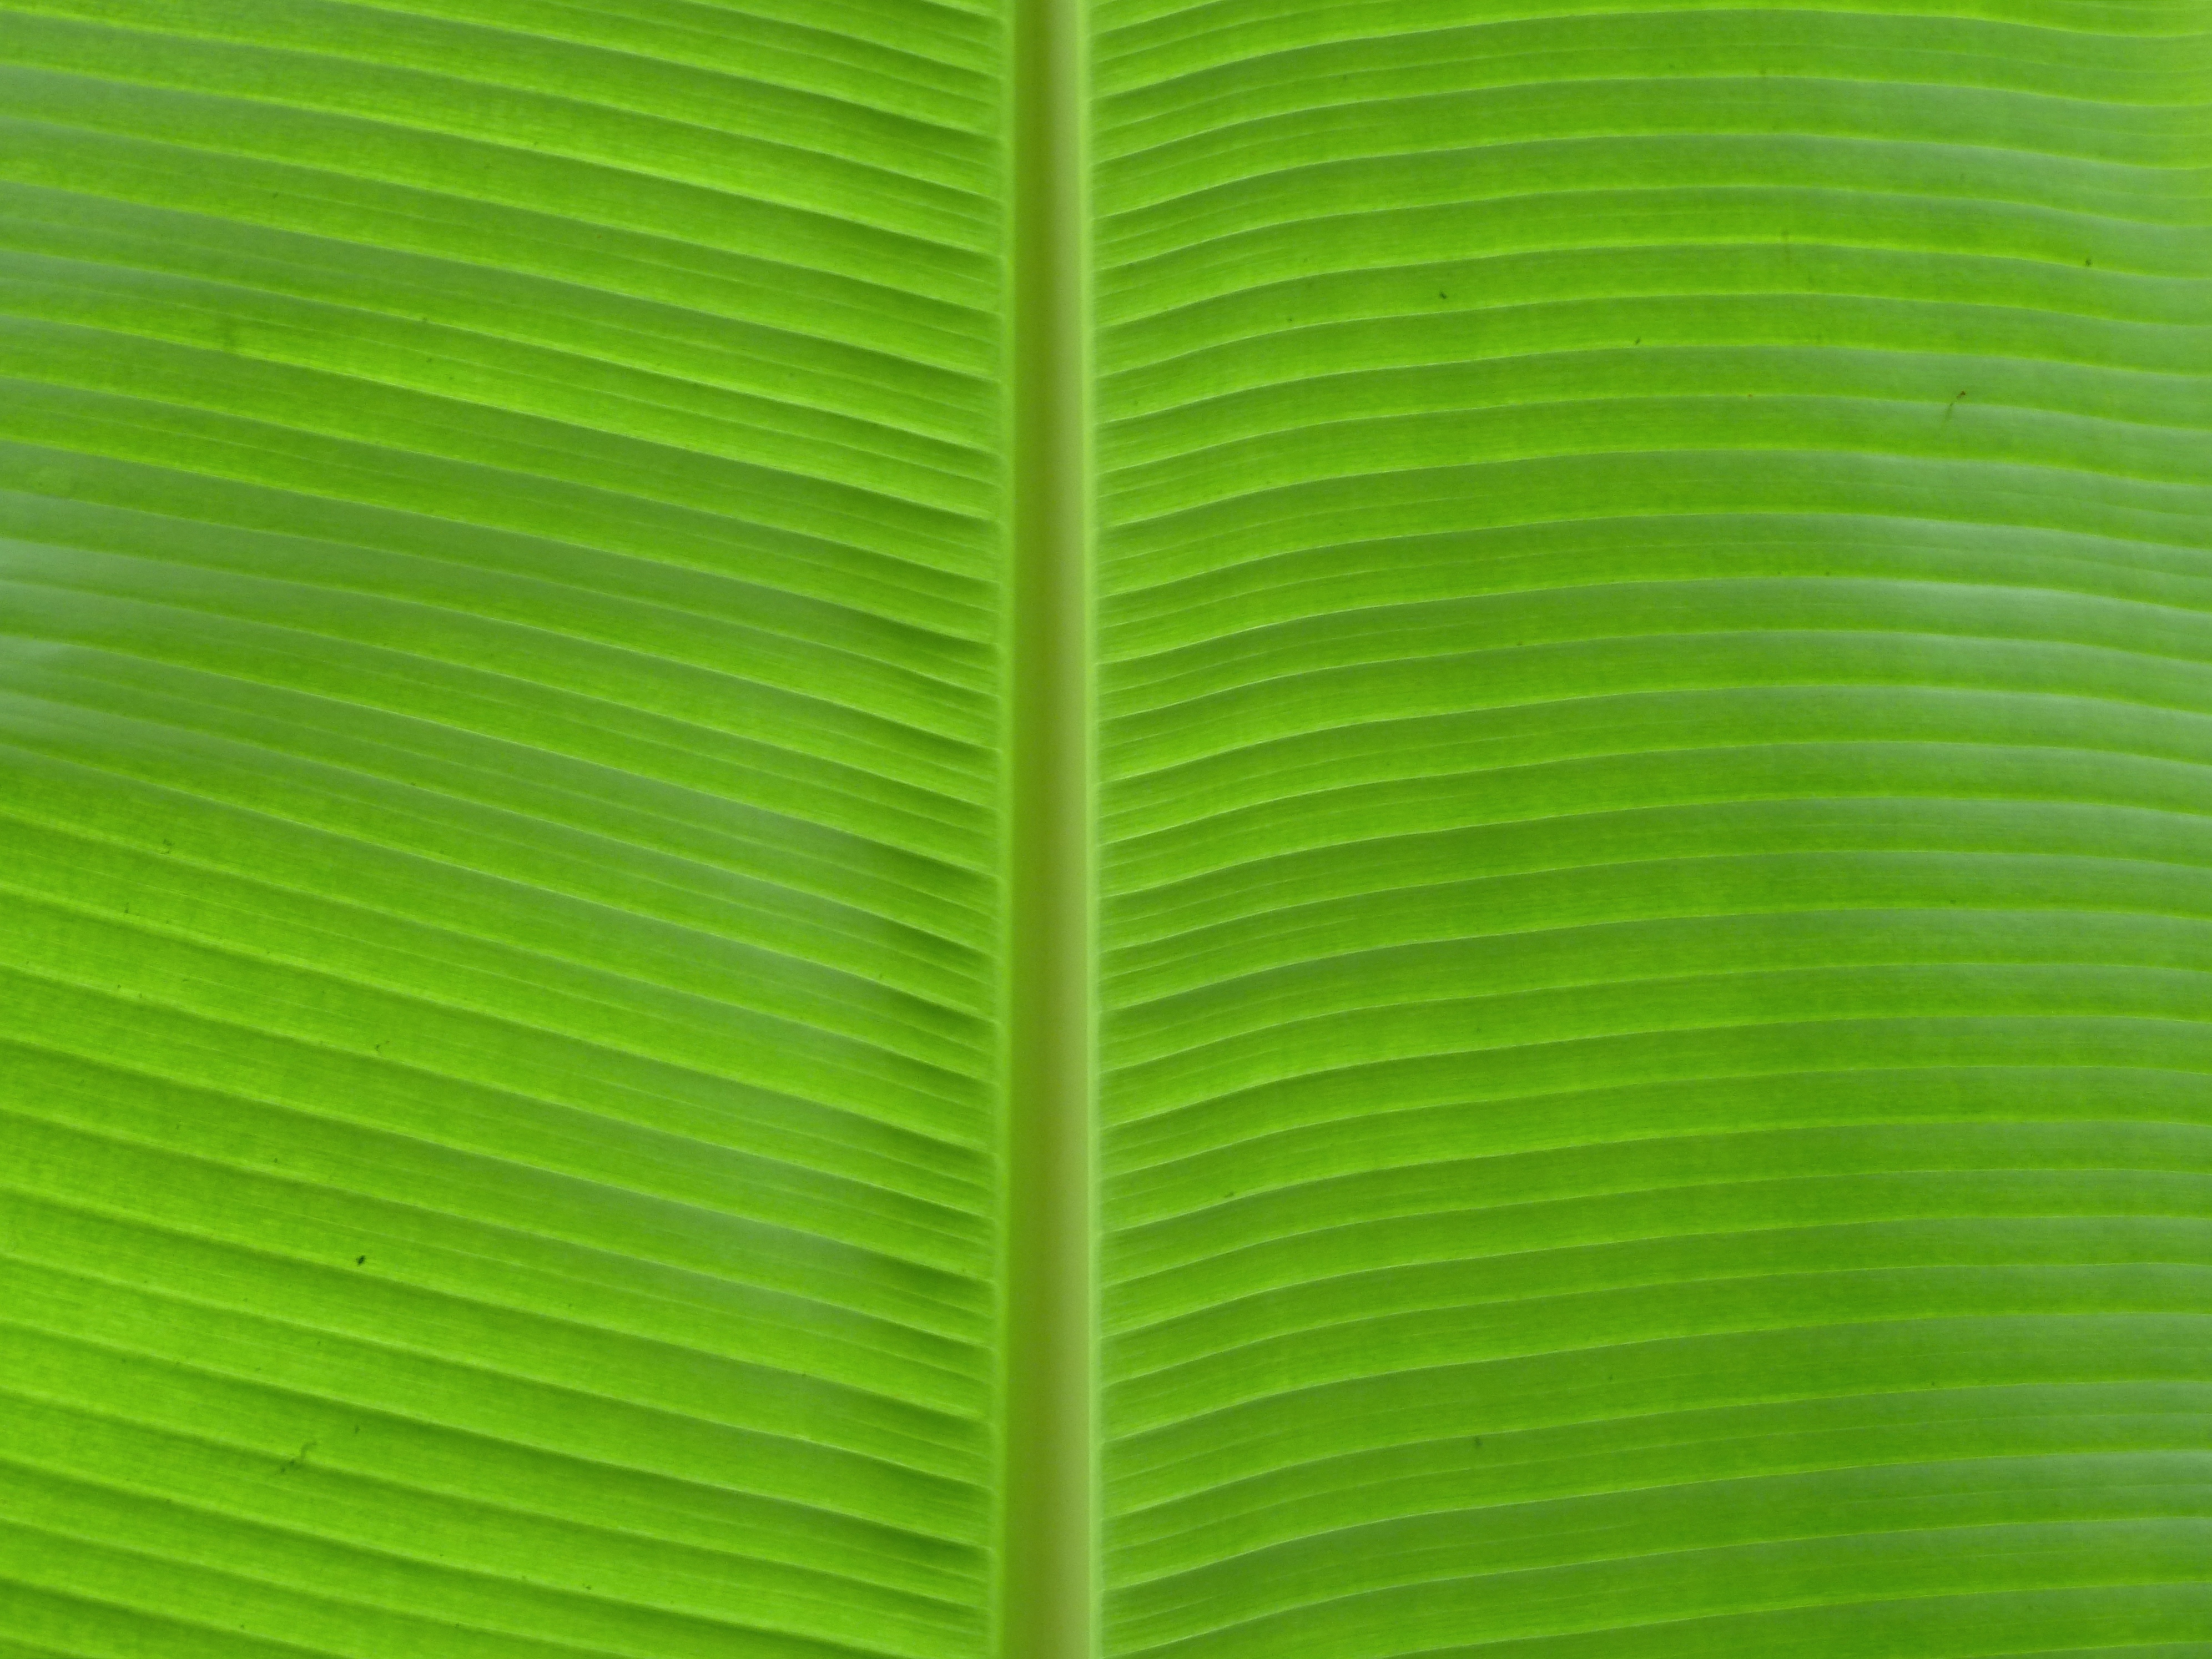 Banana Leaf Wallpaper For Desktop » Arthatravel.com